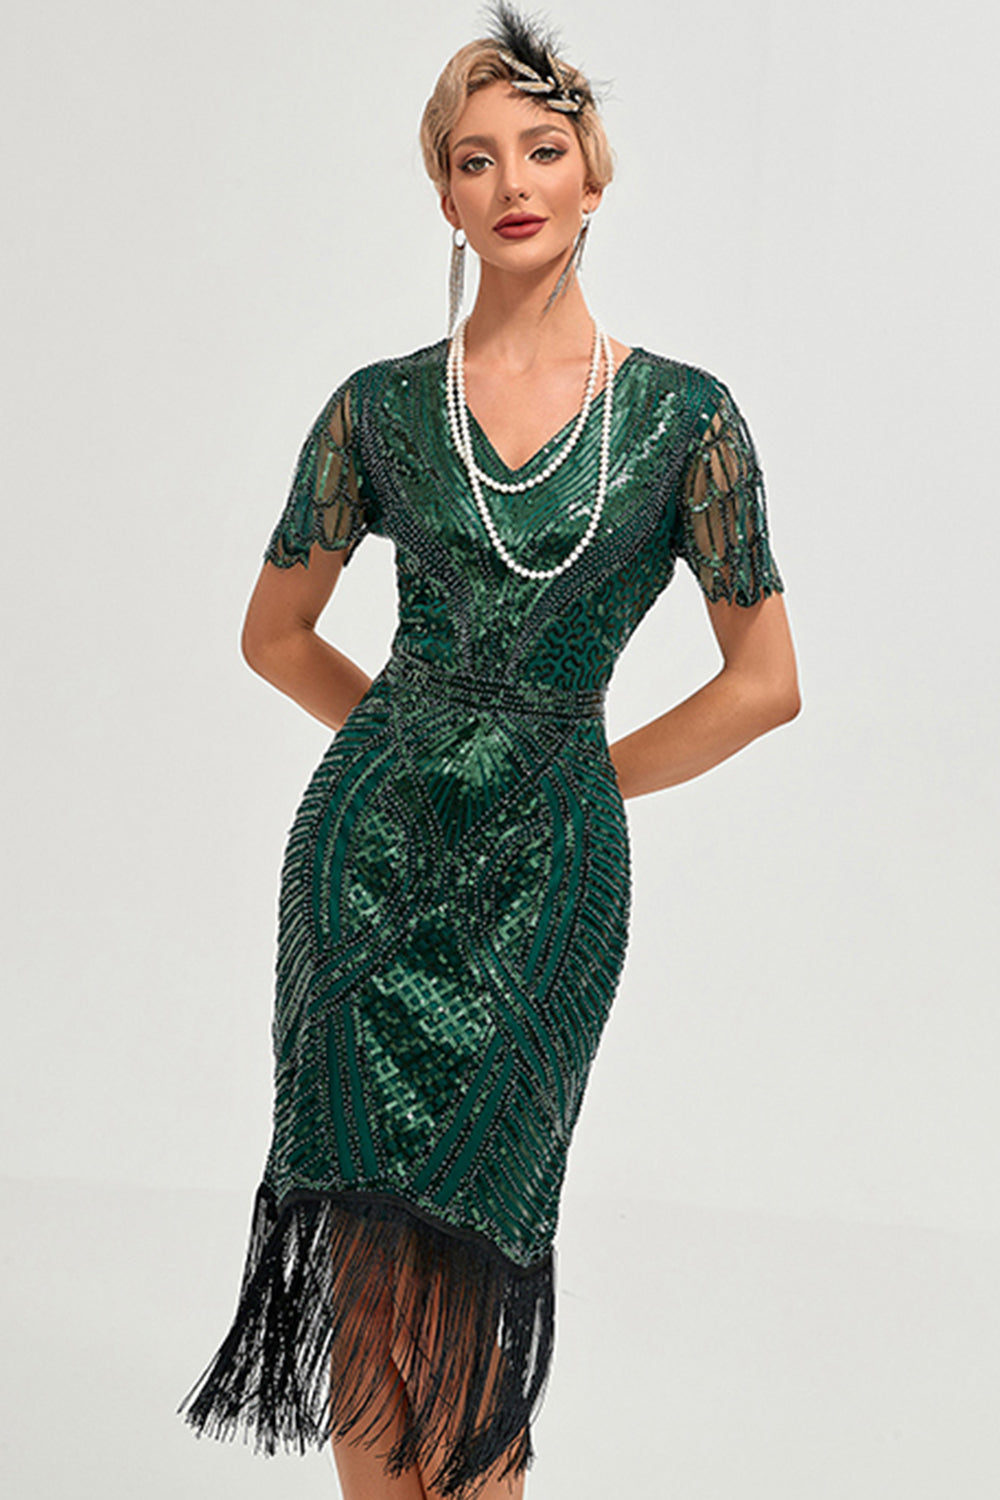 Sprankelende donkergroene kralen franje Cap mouwen jaren 1920 Gatsby jurk